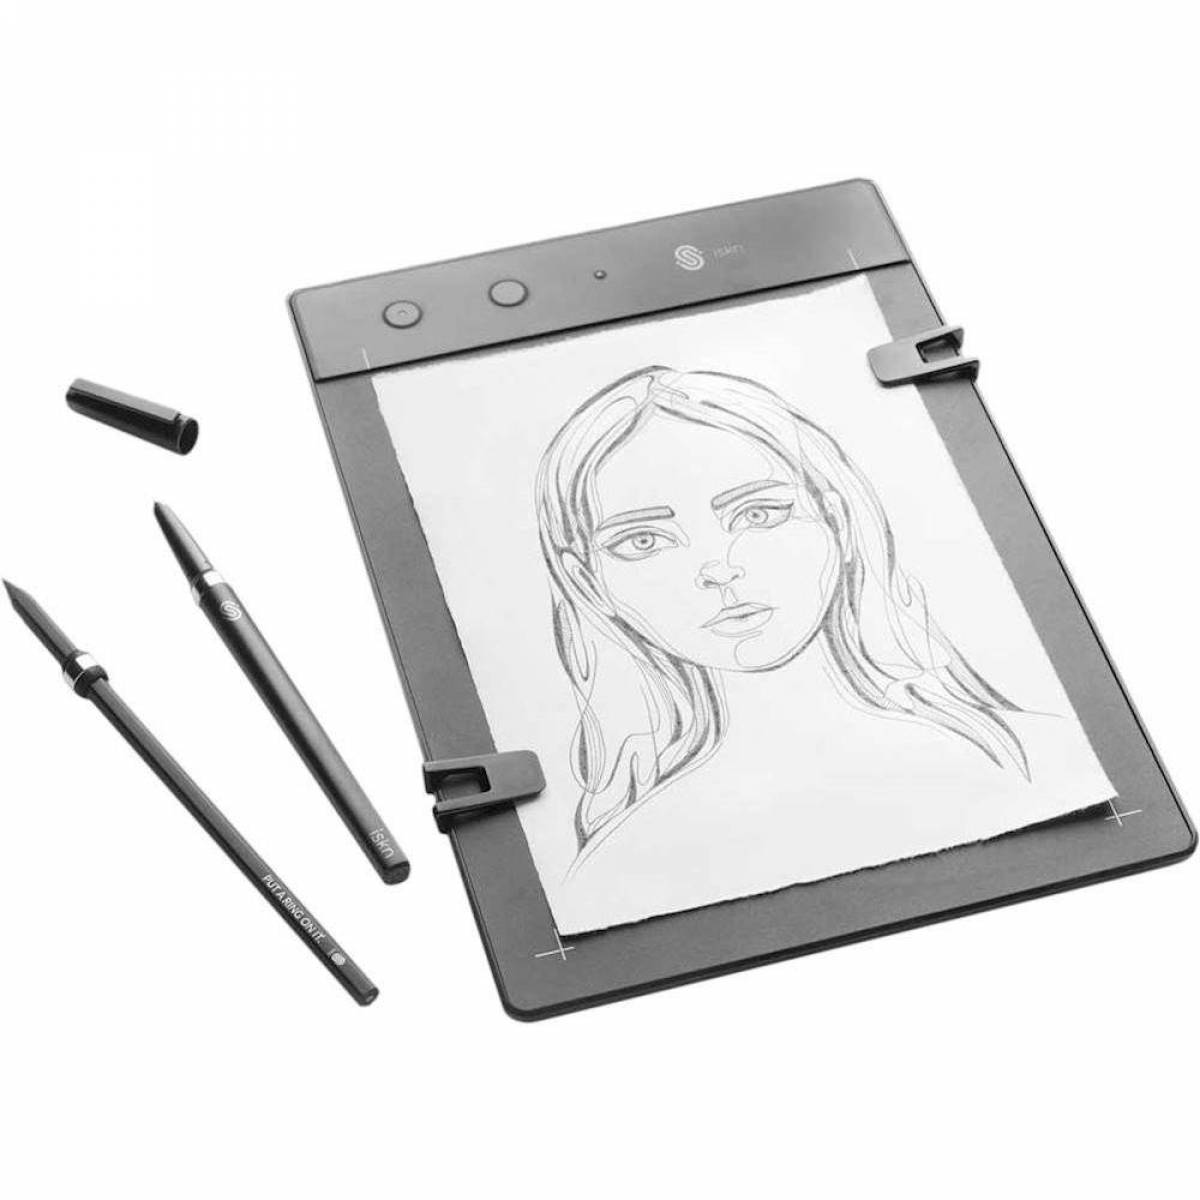 Pen drawing pad. Графический планшет Wacom Intuos Pro large paper Edition (pth-860p) + corel Painter 2020. Графический планшет Wacom со стилусом а5. Графический планшет Bosto BT-12hd. Графический планшет Trust Slimline Sketch Tablet.